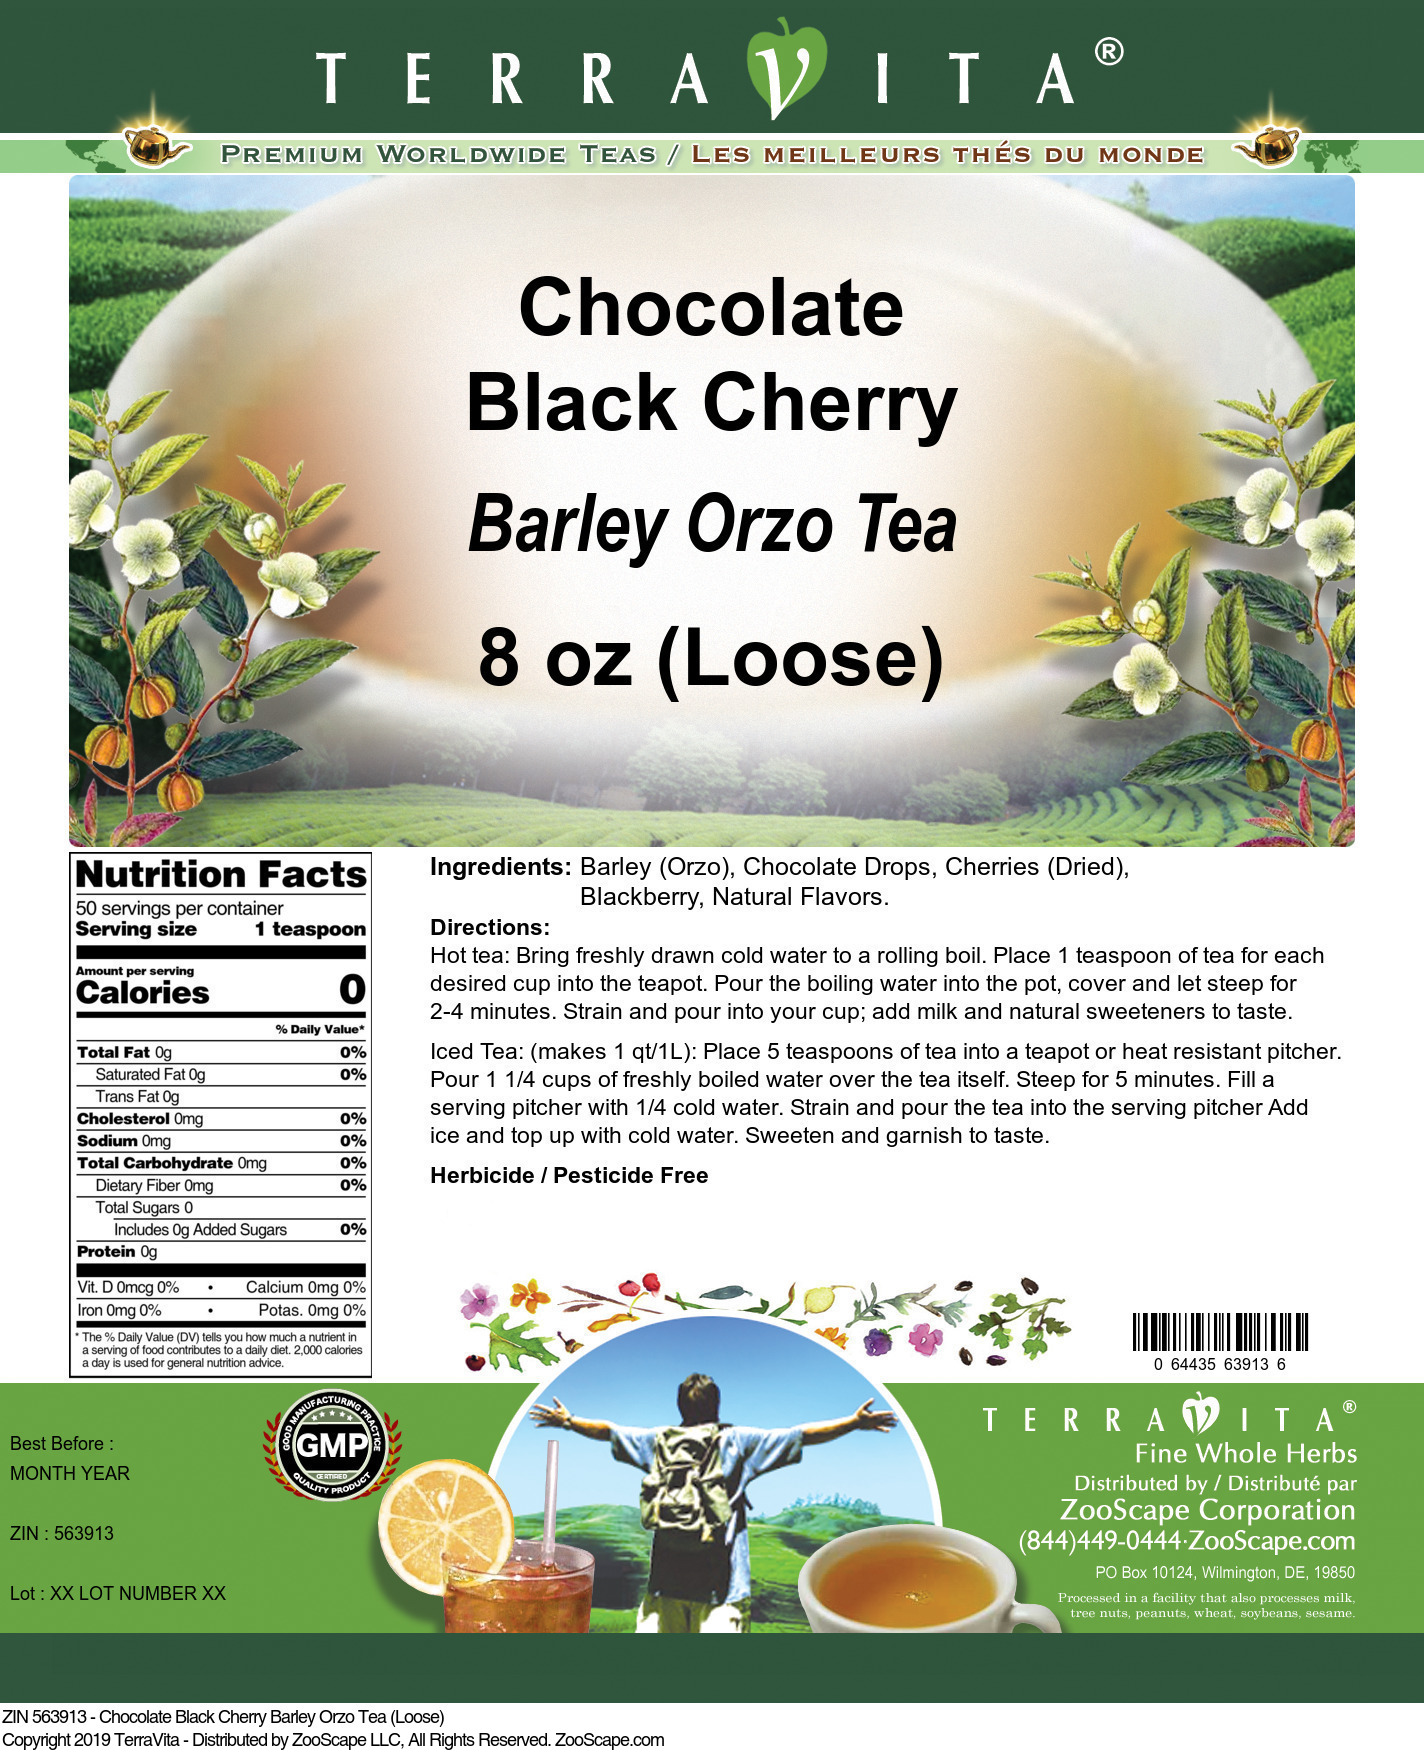 Chocolate Black Cherry Barley Orzo Tea (Loose) - Label